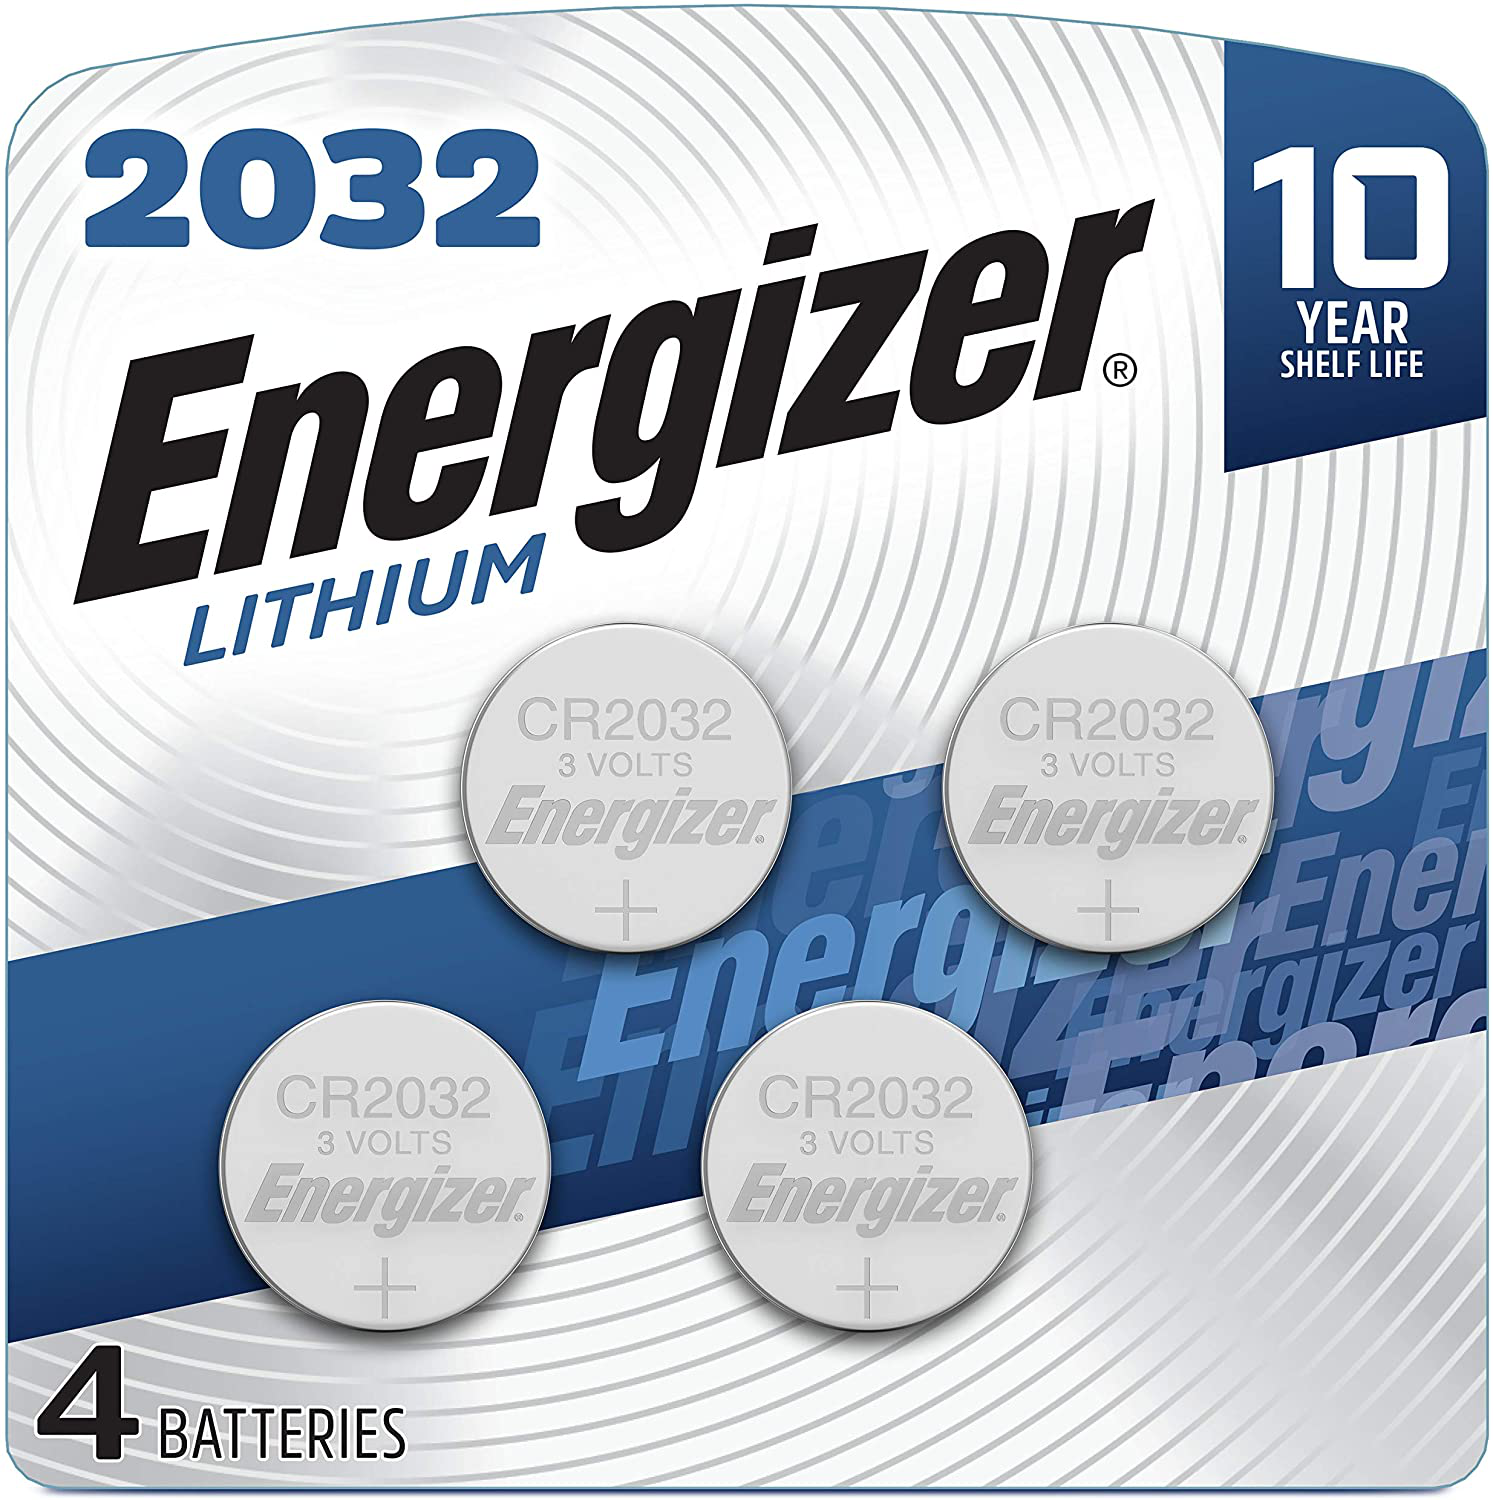 Energizer 2032 Batteries 3V Lithium Replaces BR2032, DL2032, ECR2032